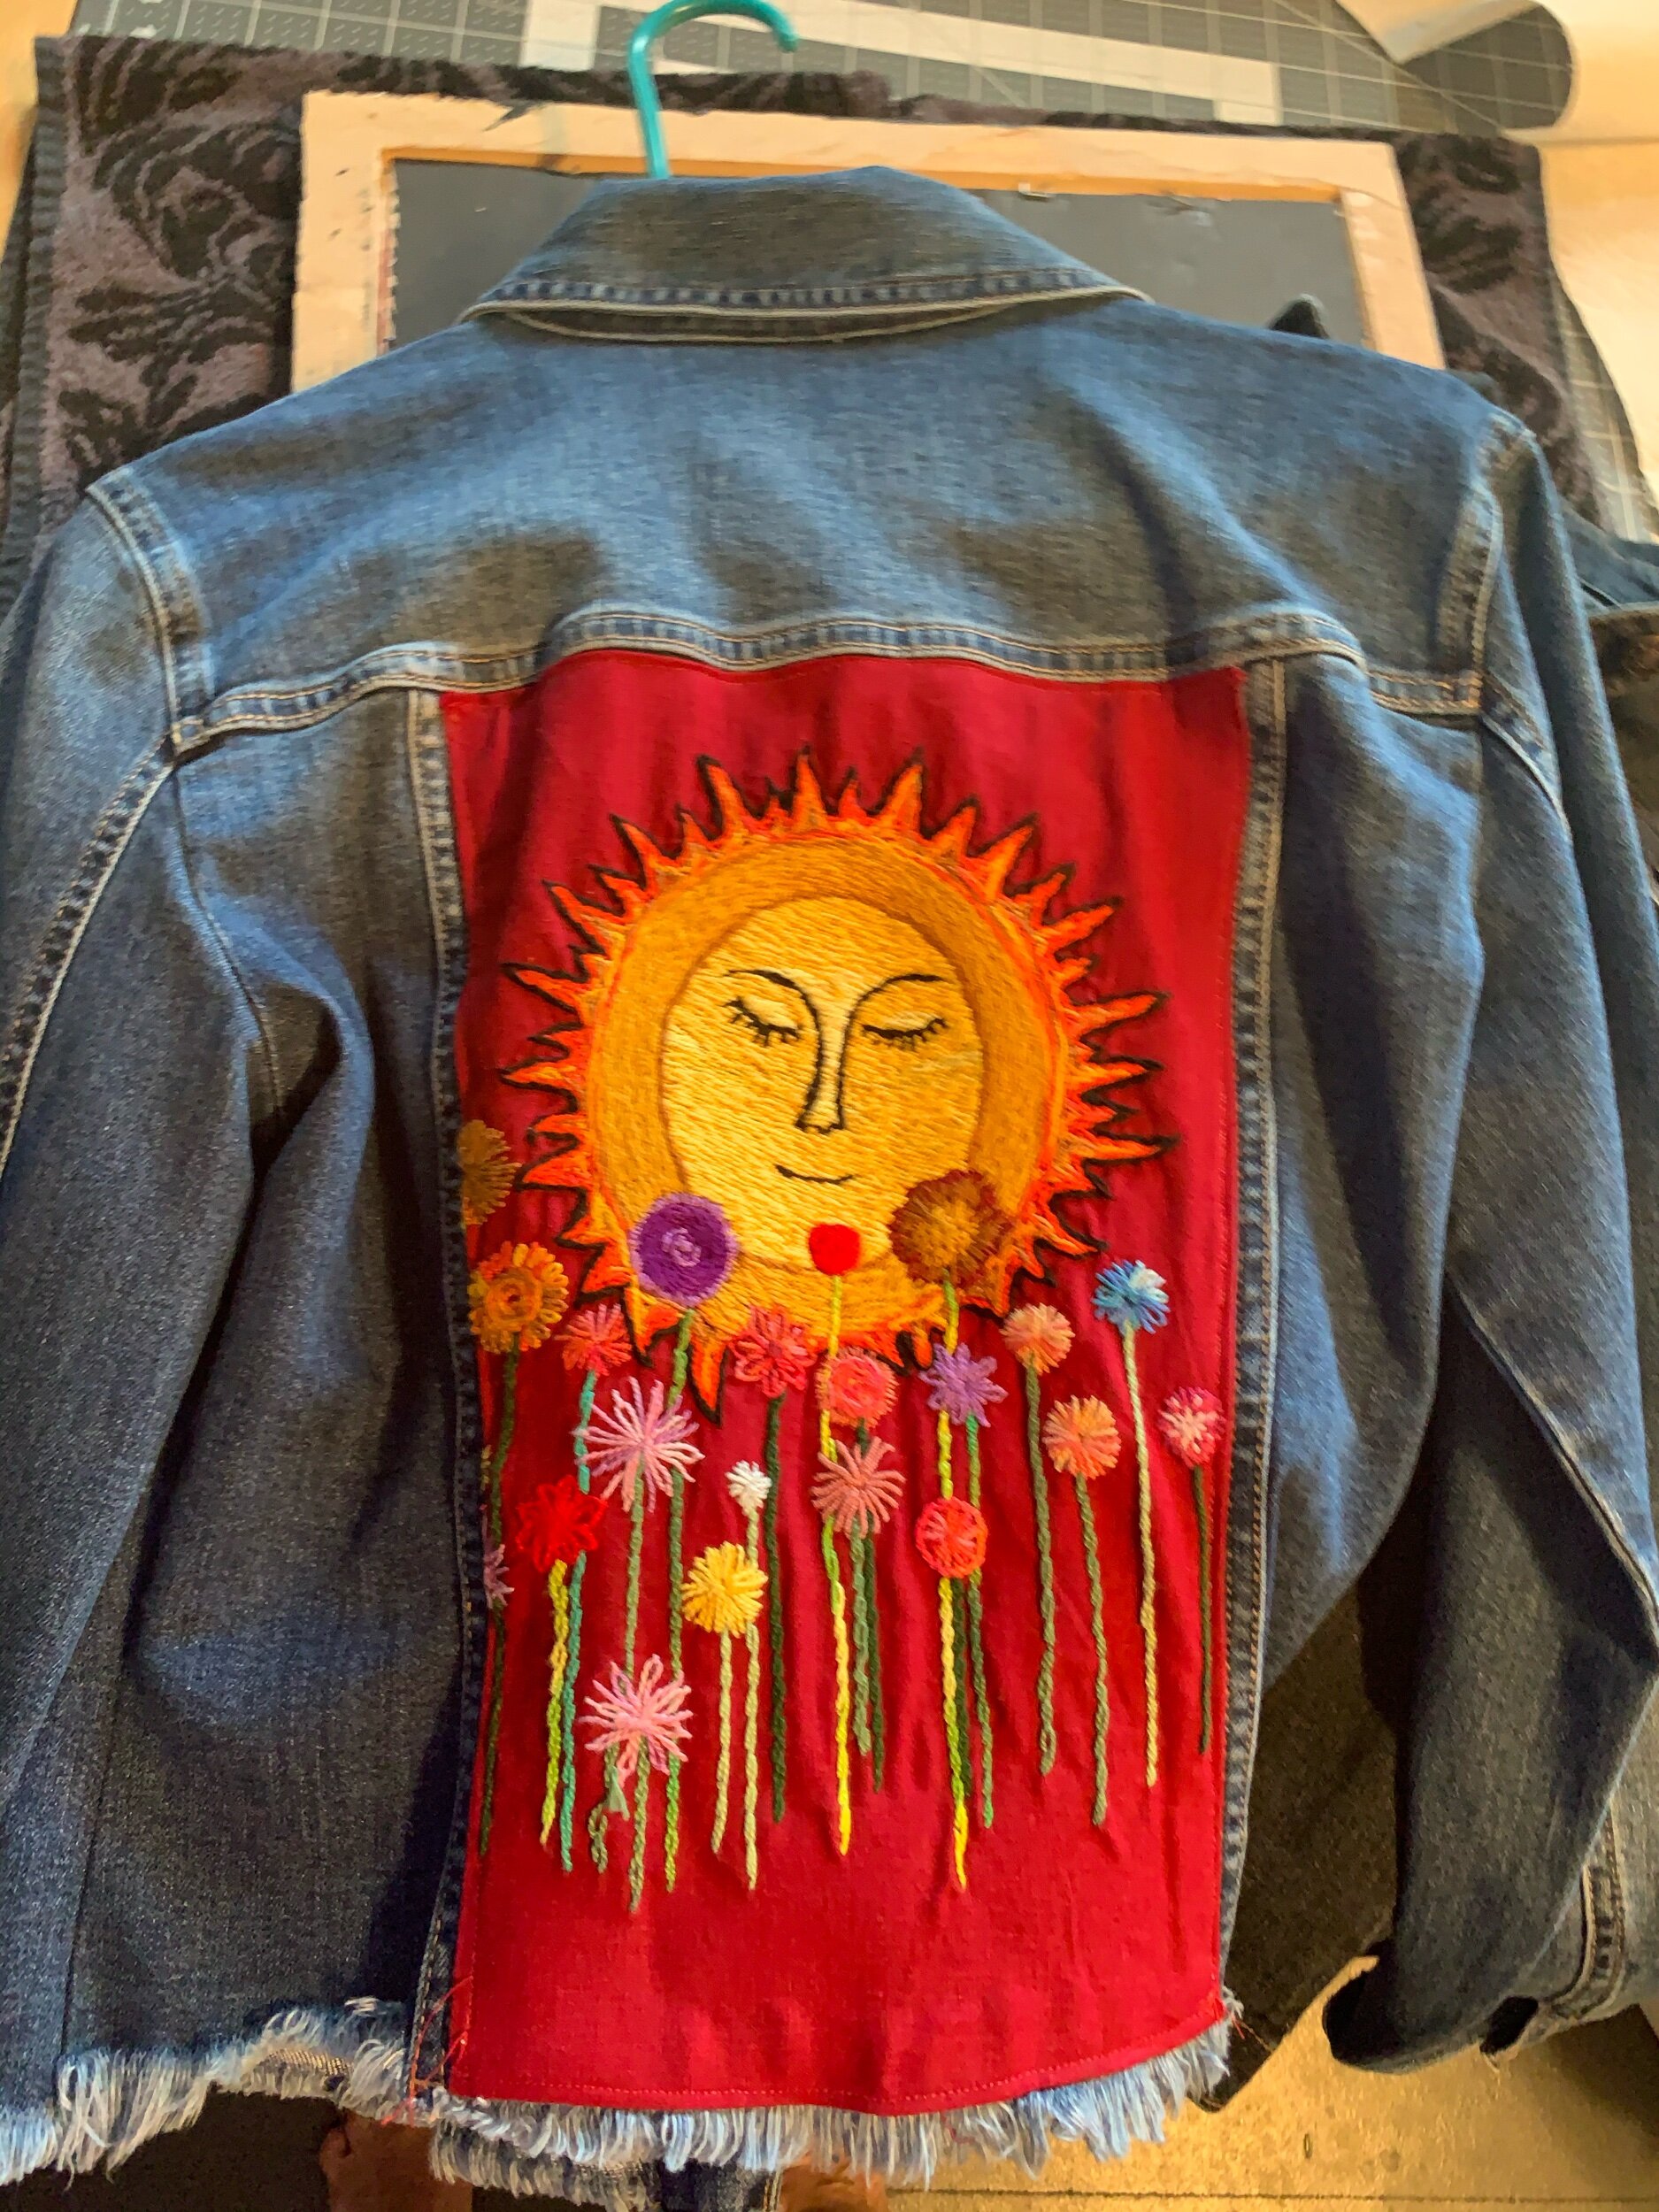 Child’s jacket with sun